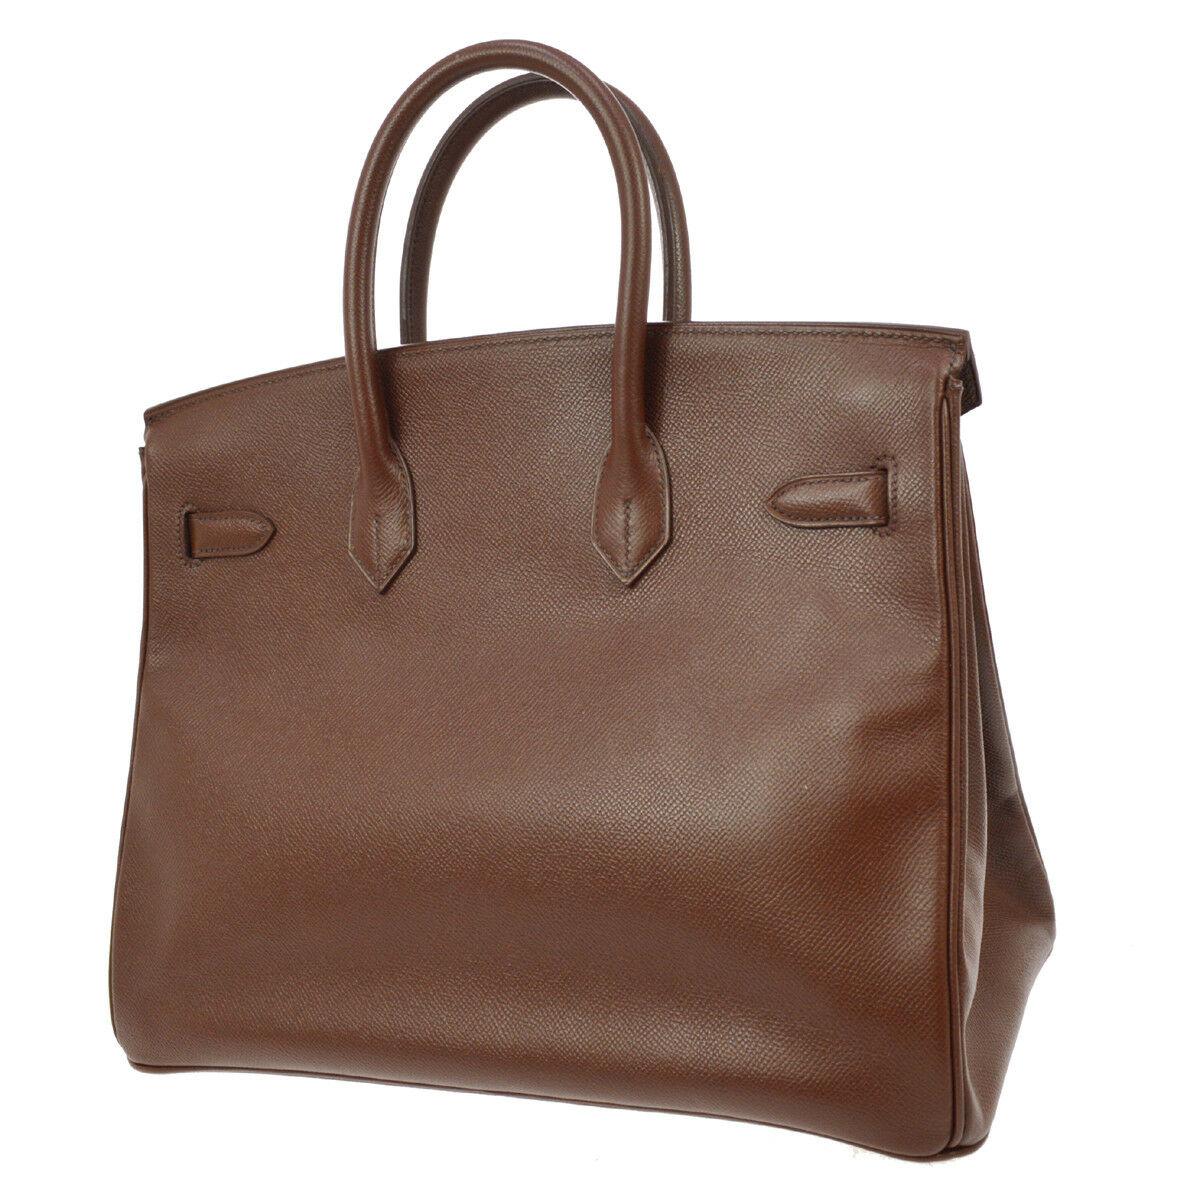 Women's Hermes Birkin 35 Brown Leather Gold Top Carryall Handle Satchel Travel Tote Bag